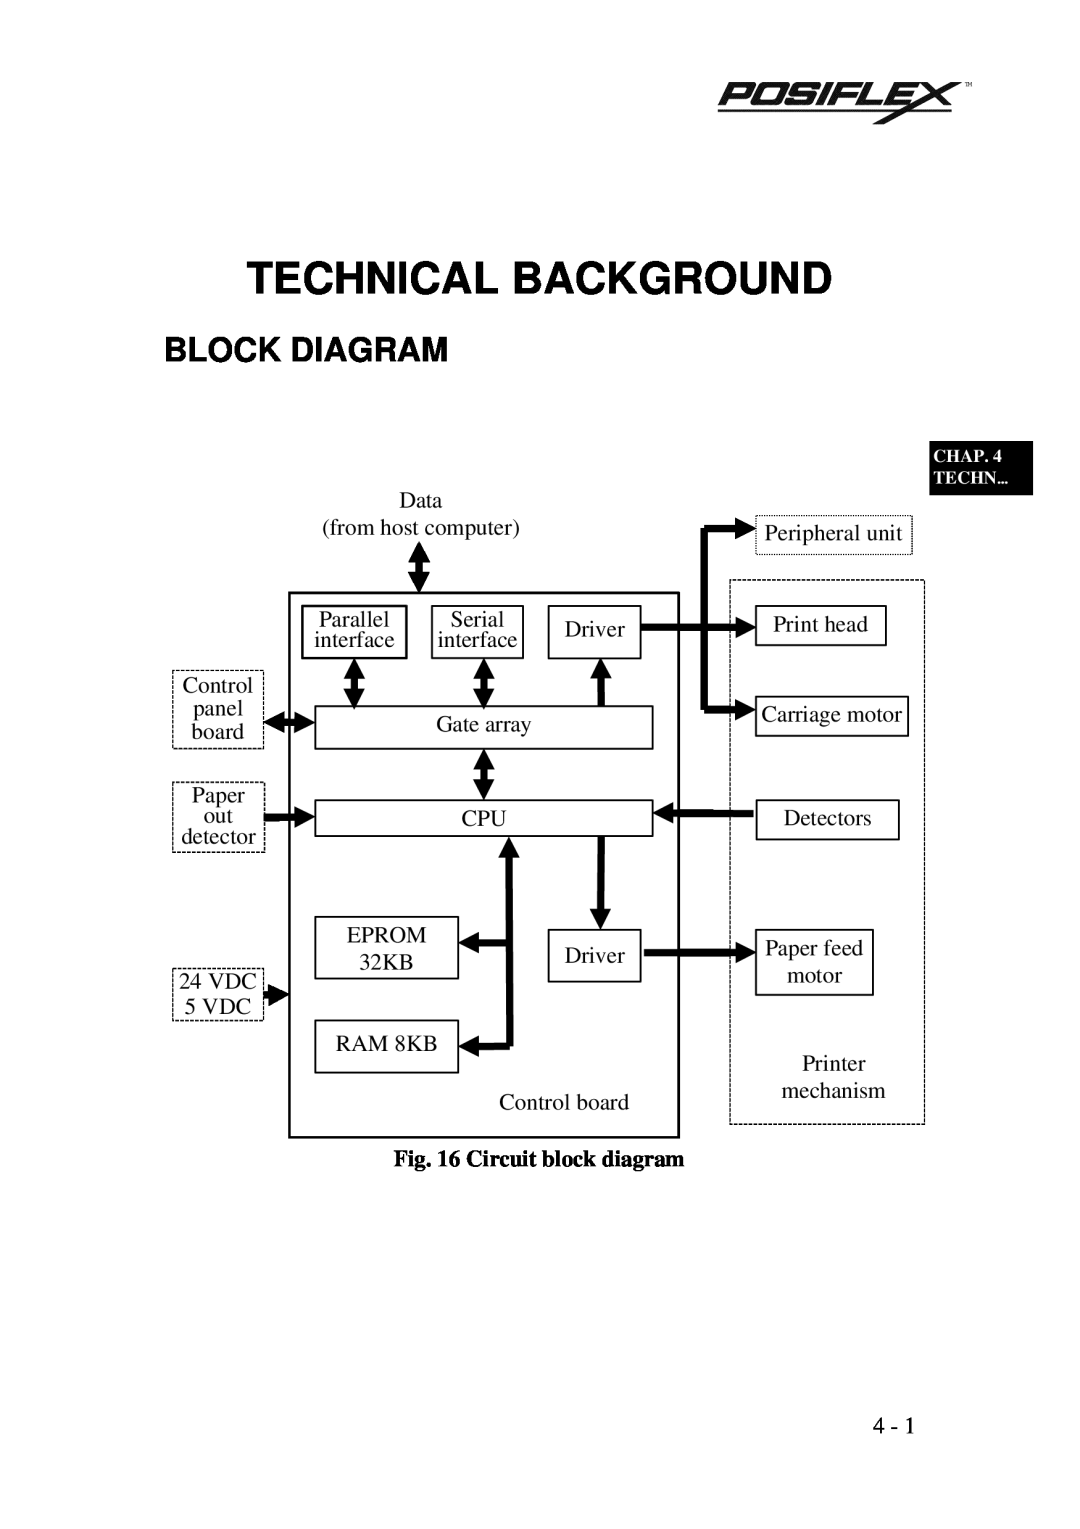 POSIFLEX Business Machines PP3000 manual Technical Background, Block Diagram, Circuit block diagram 